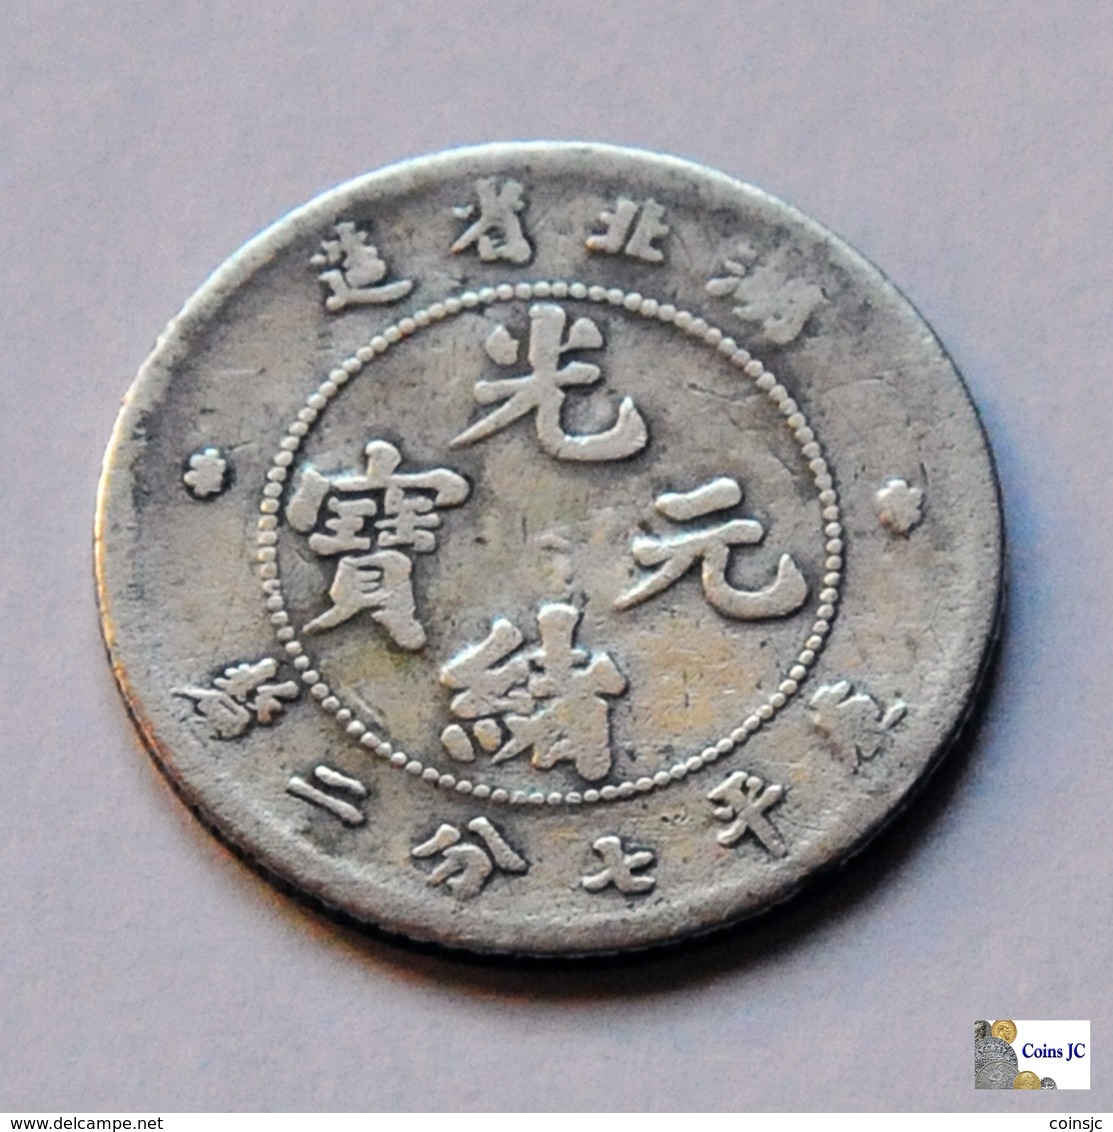 China - Hupeh Province - 10 Cents - (1895-1905) - China